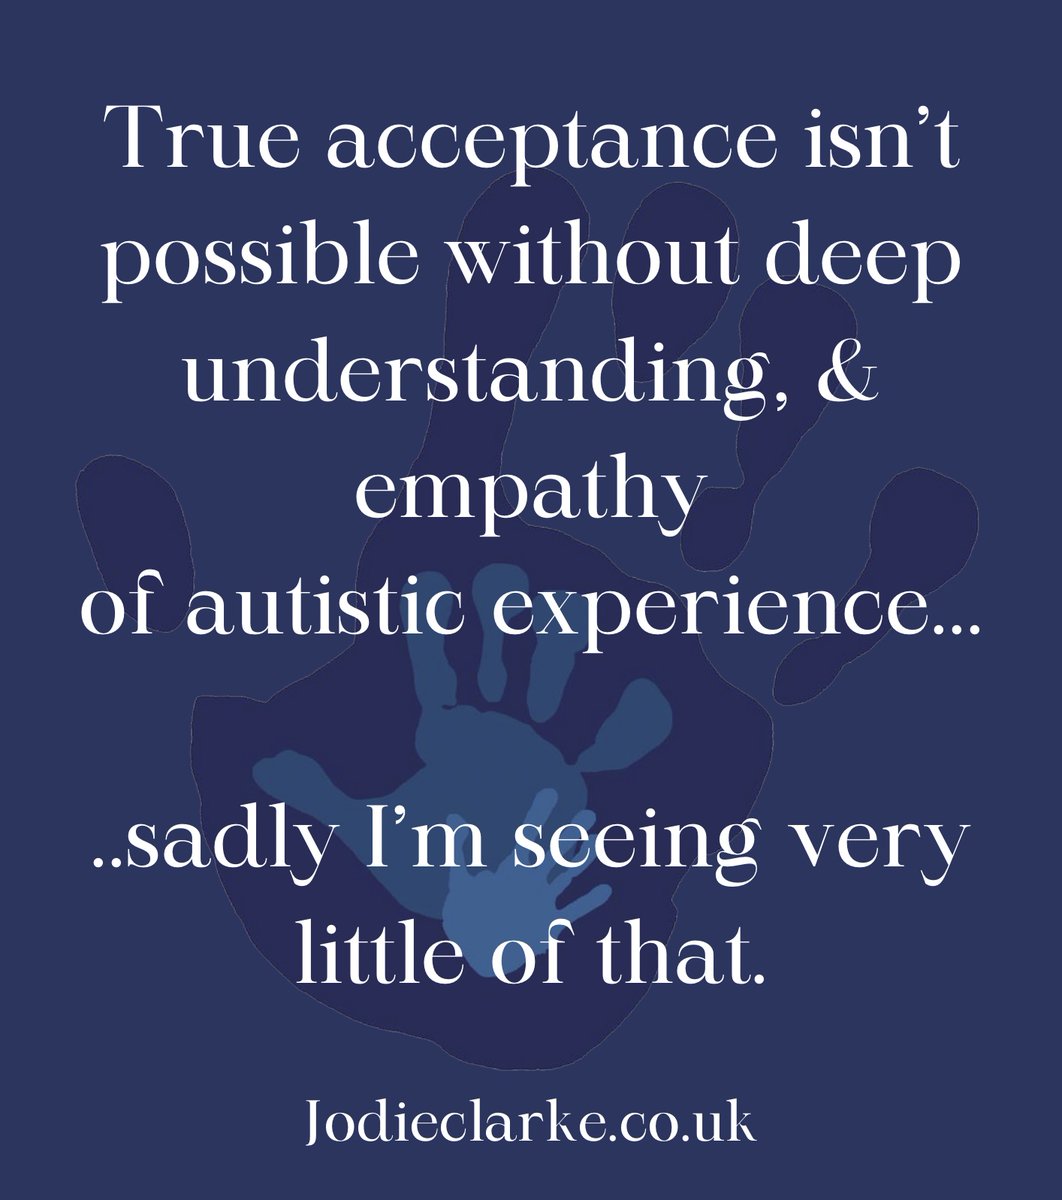 #AutismAcceptance #ActuallyAutistic #autistic #Neurodivergent